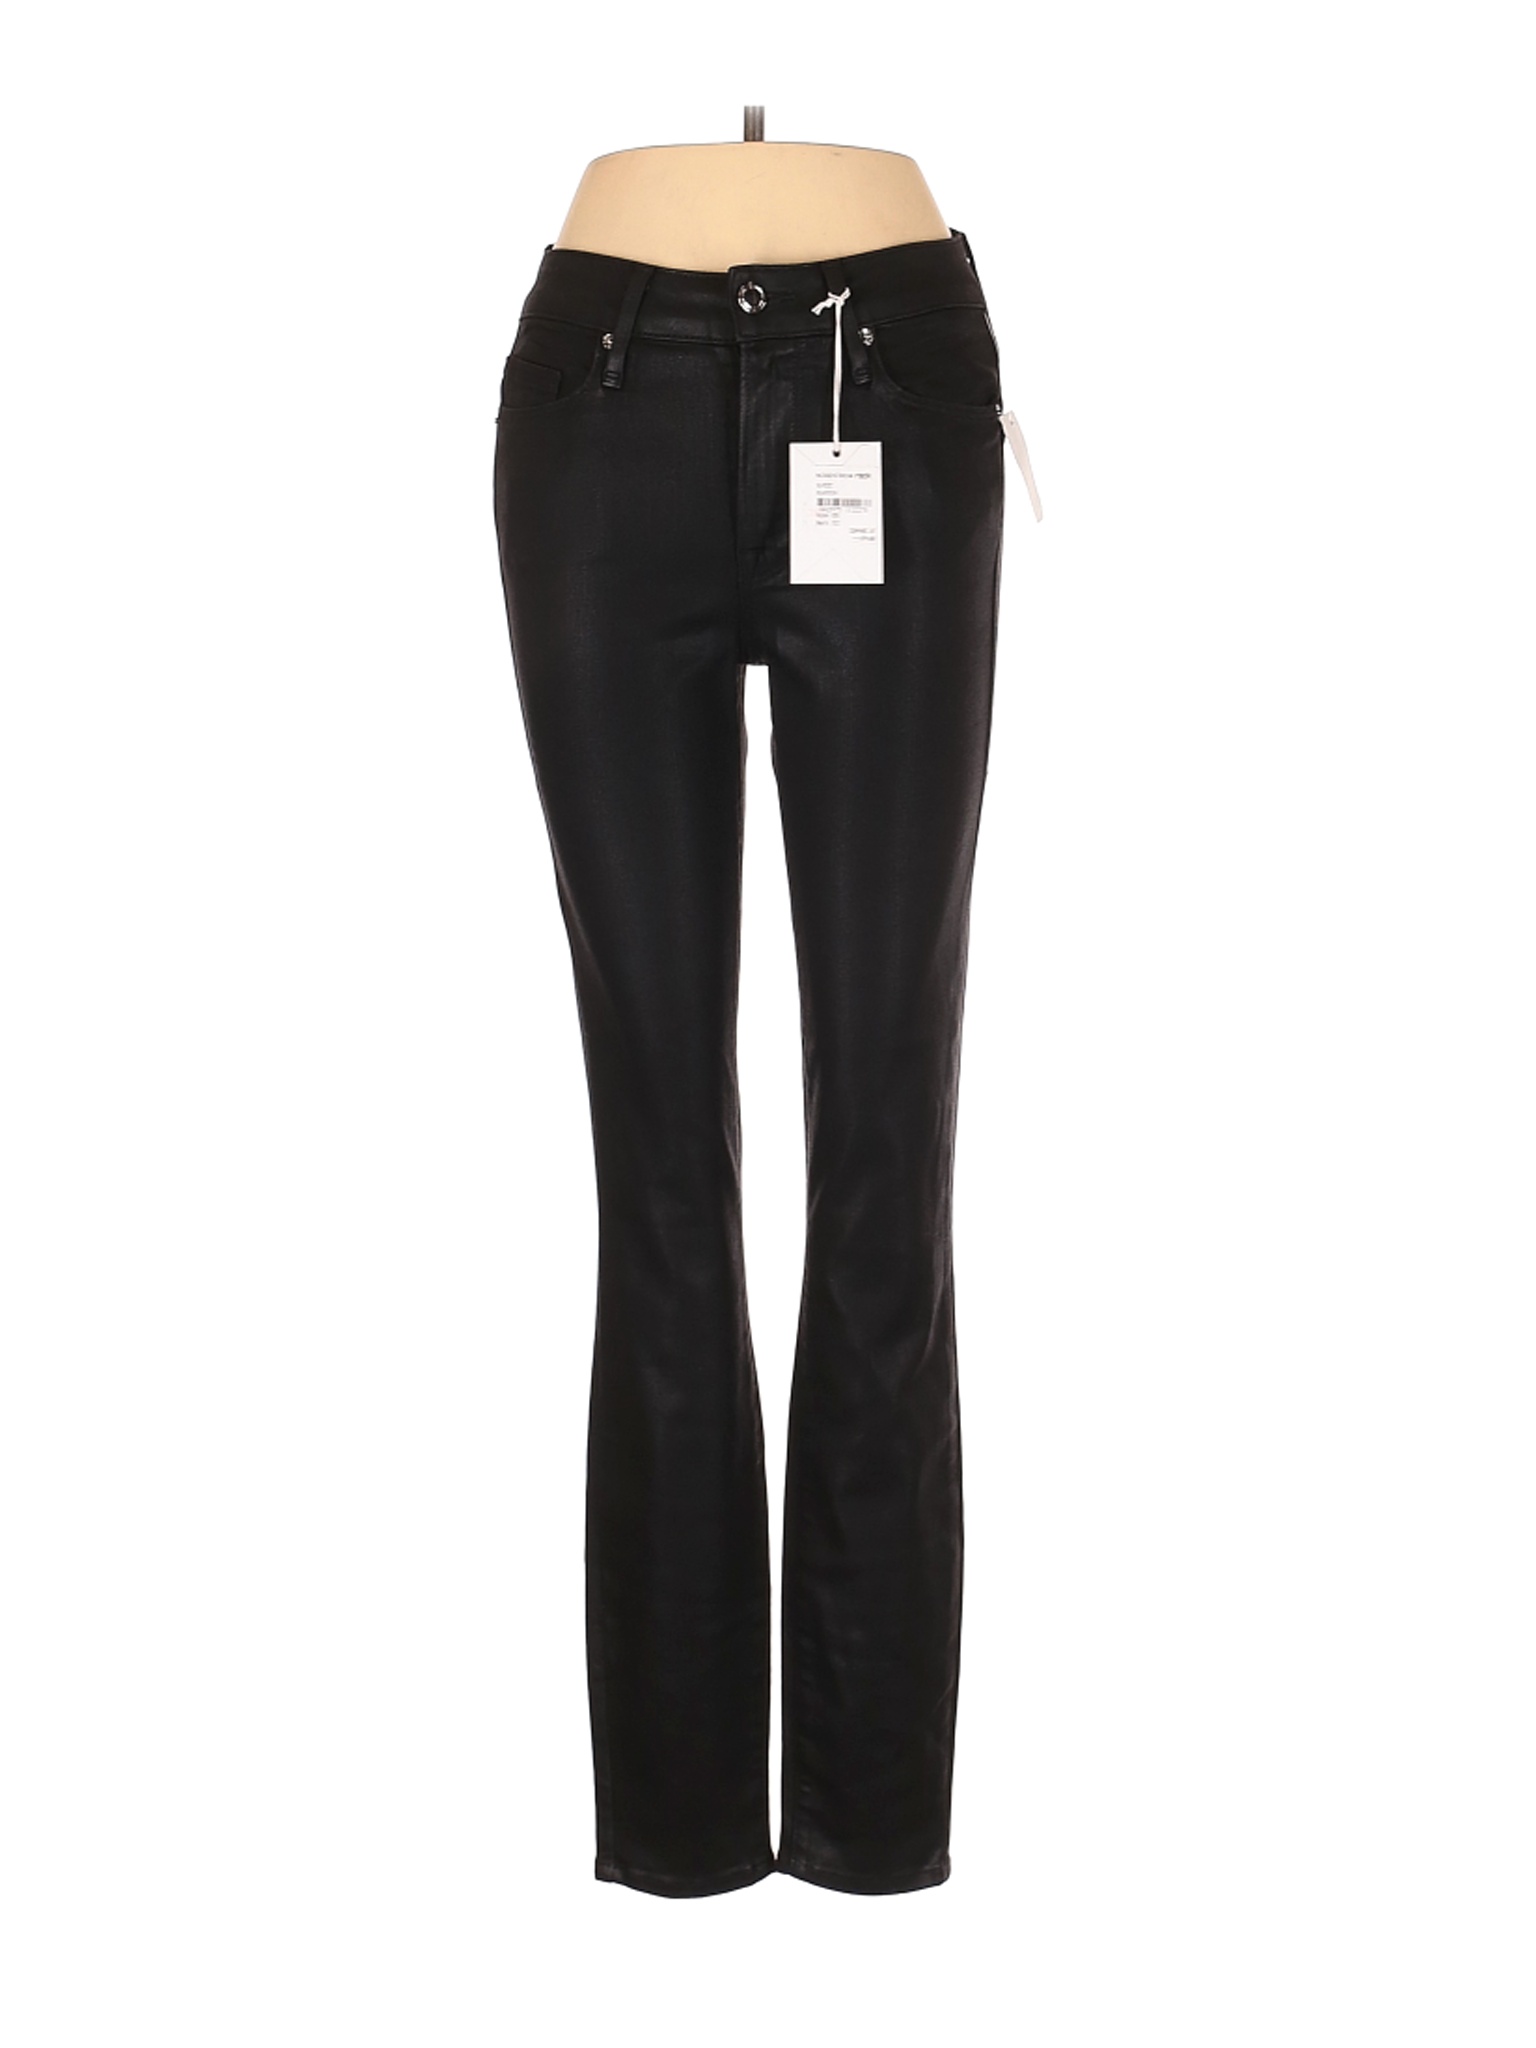 NWT Good American Women Black Jeans 25W | eBay